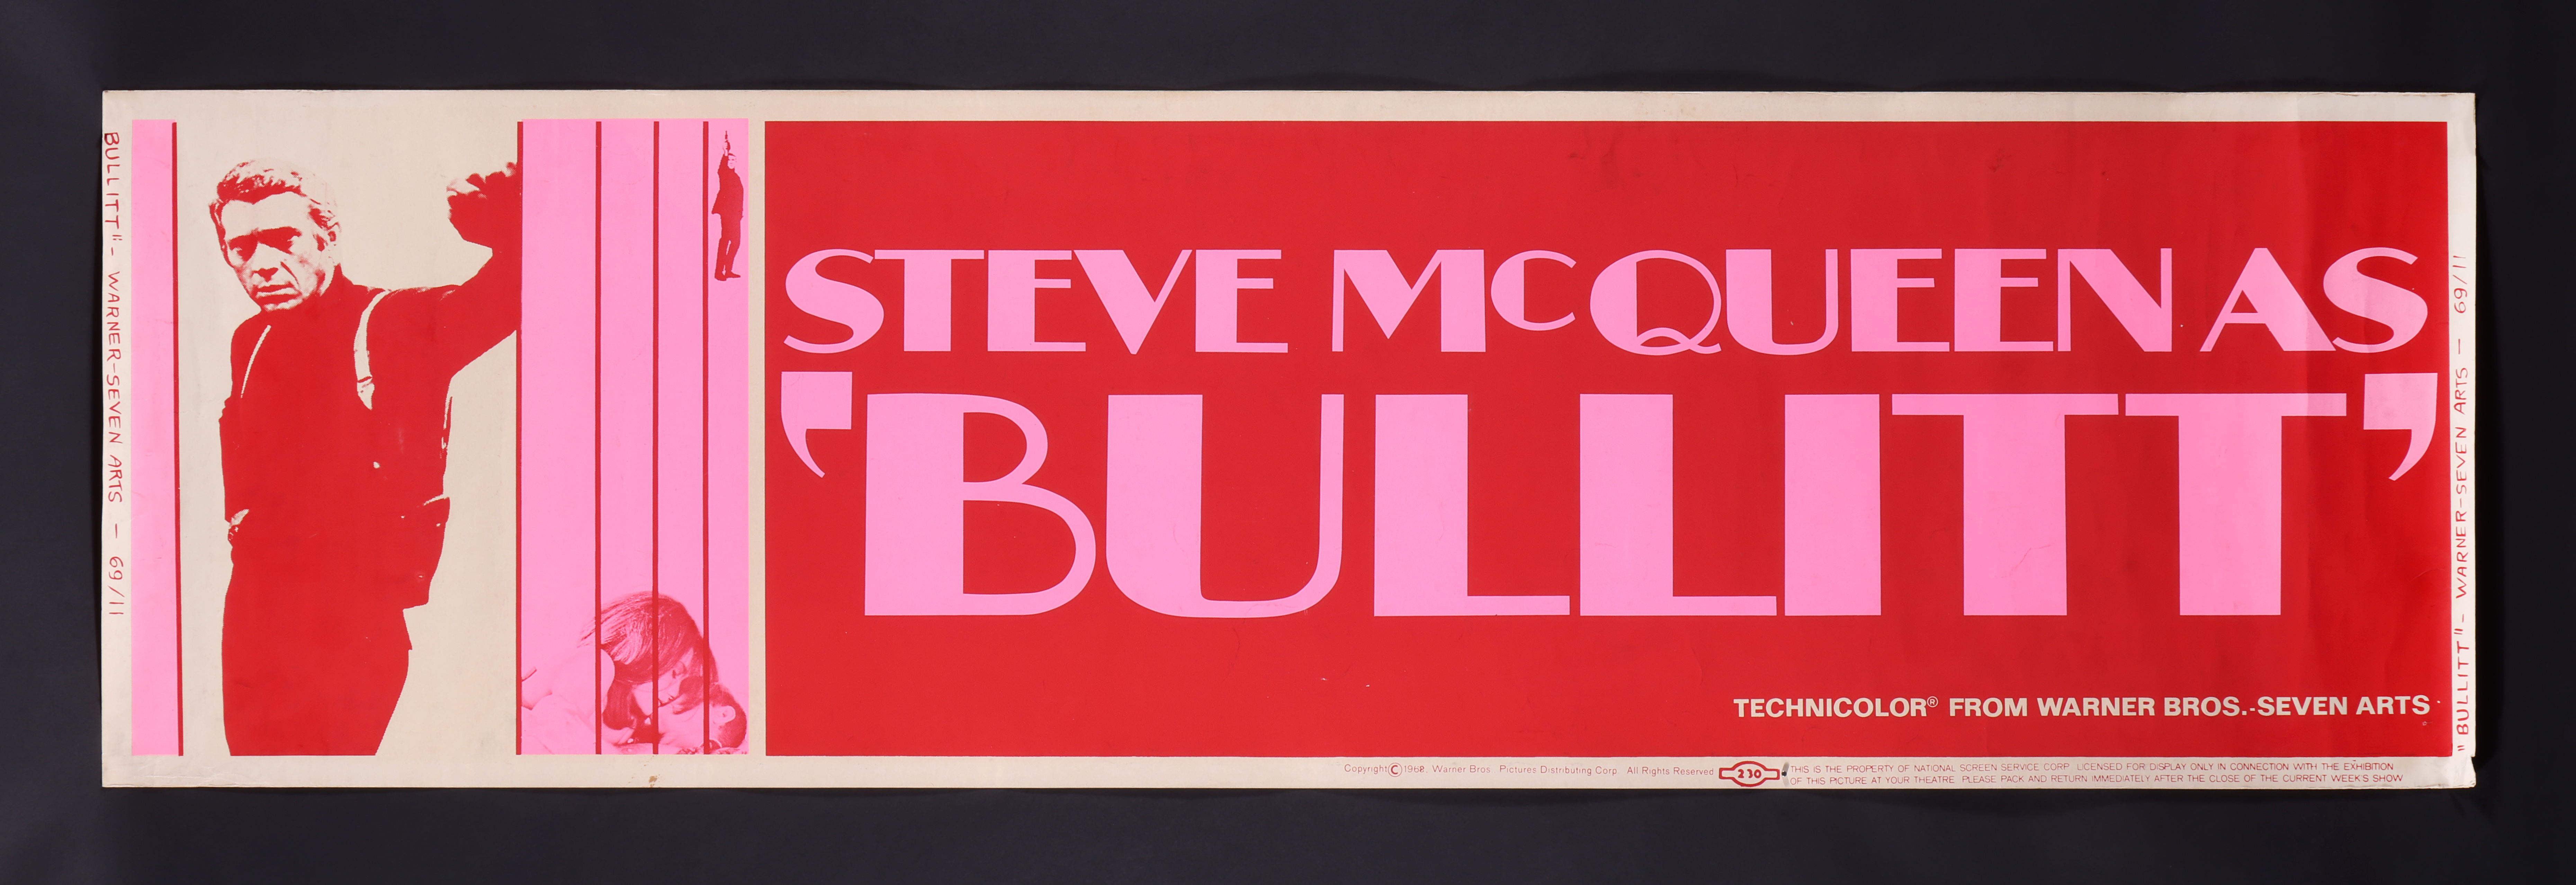 BULLITT (1968) - David Frangioni Collection: US Paper Banner, 1968